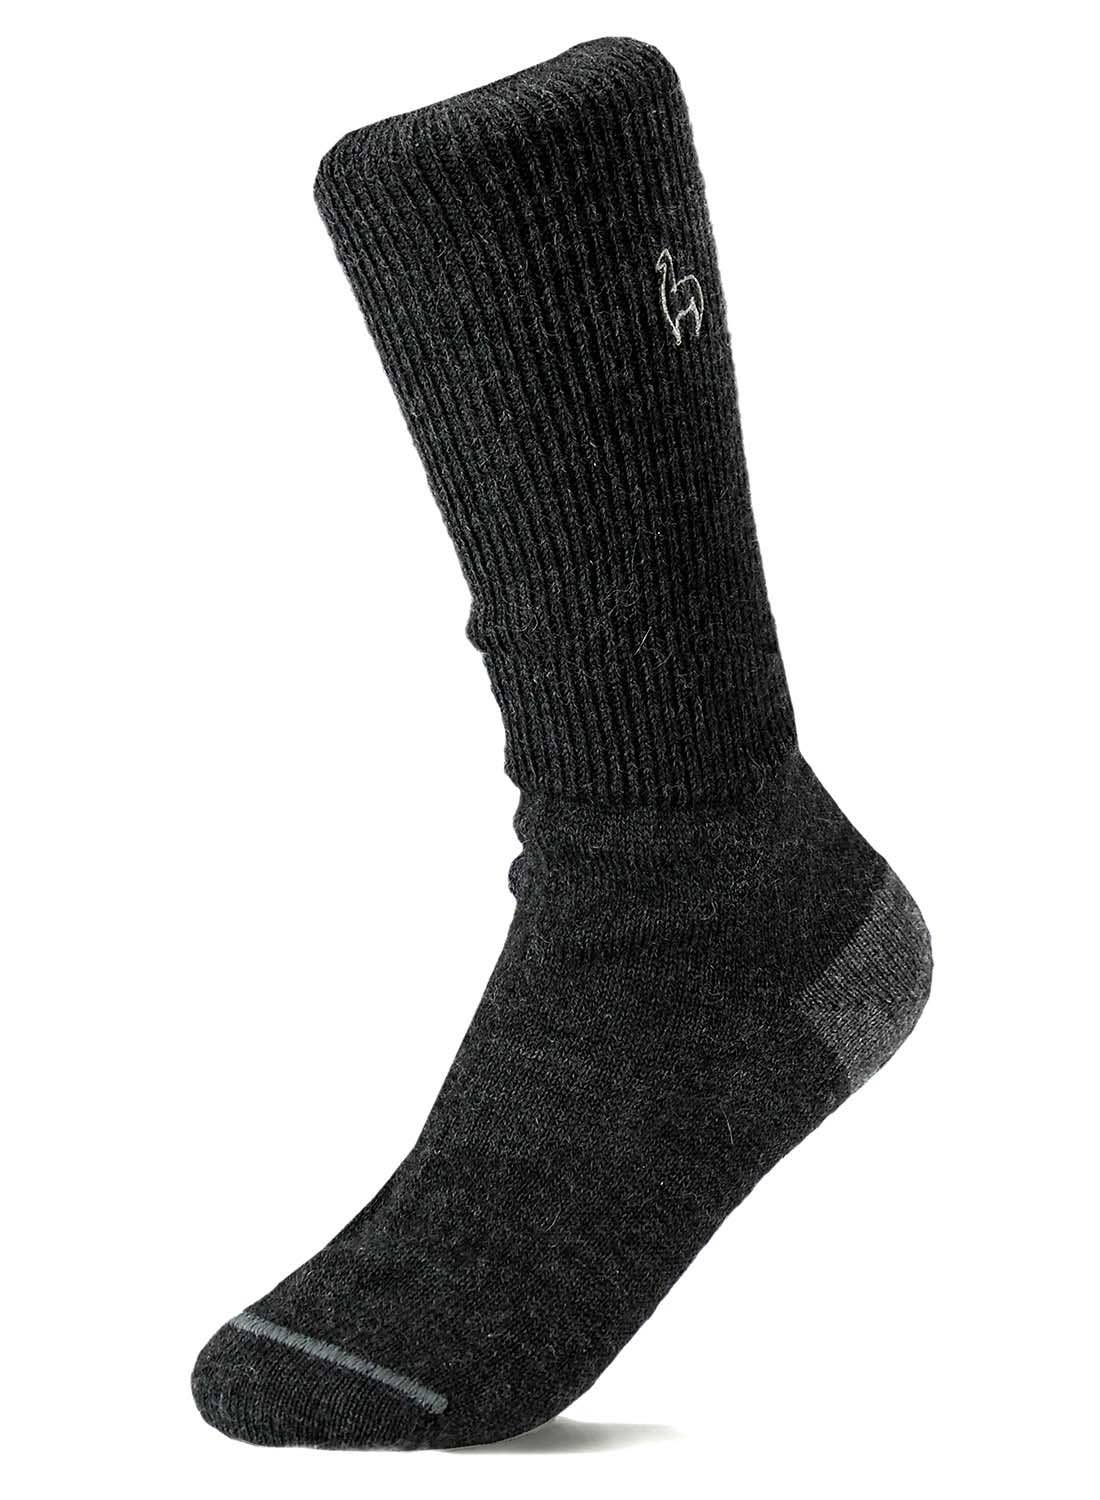 Alpaca Socks - Business - Black: Size Large